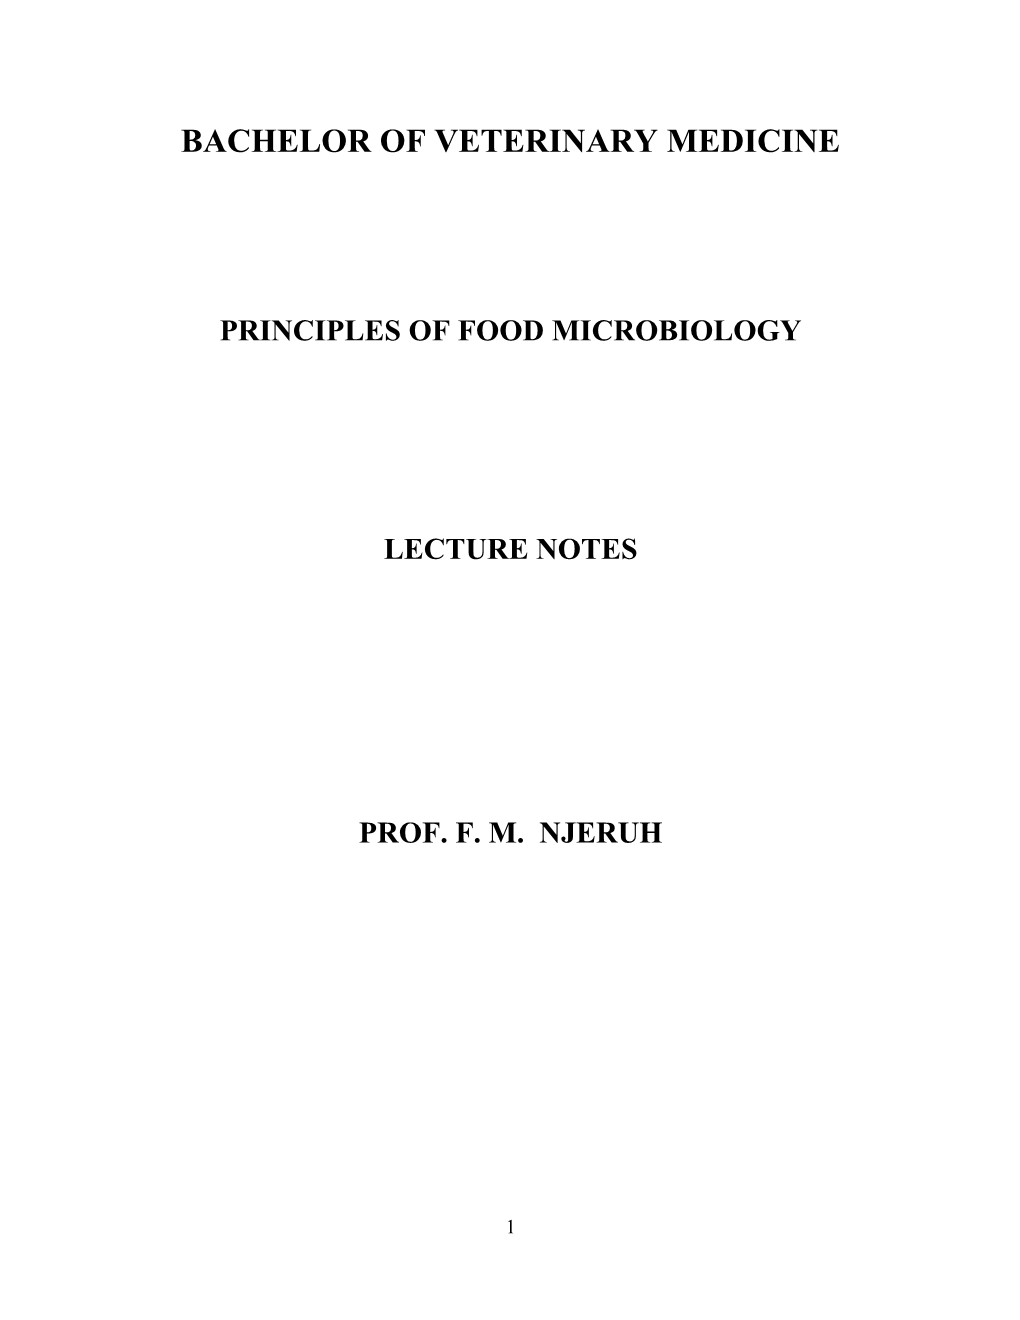 Principal of Food Microbiology